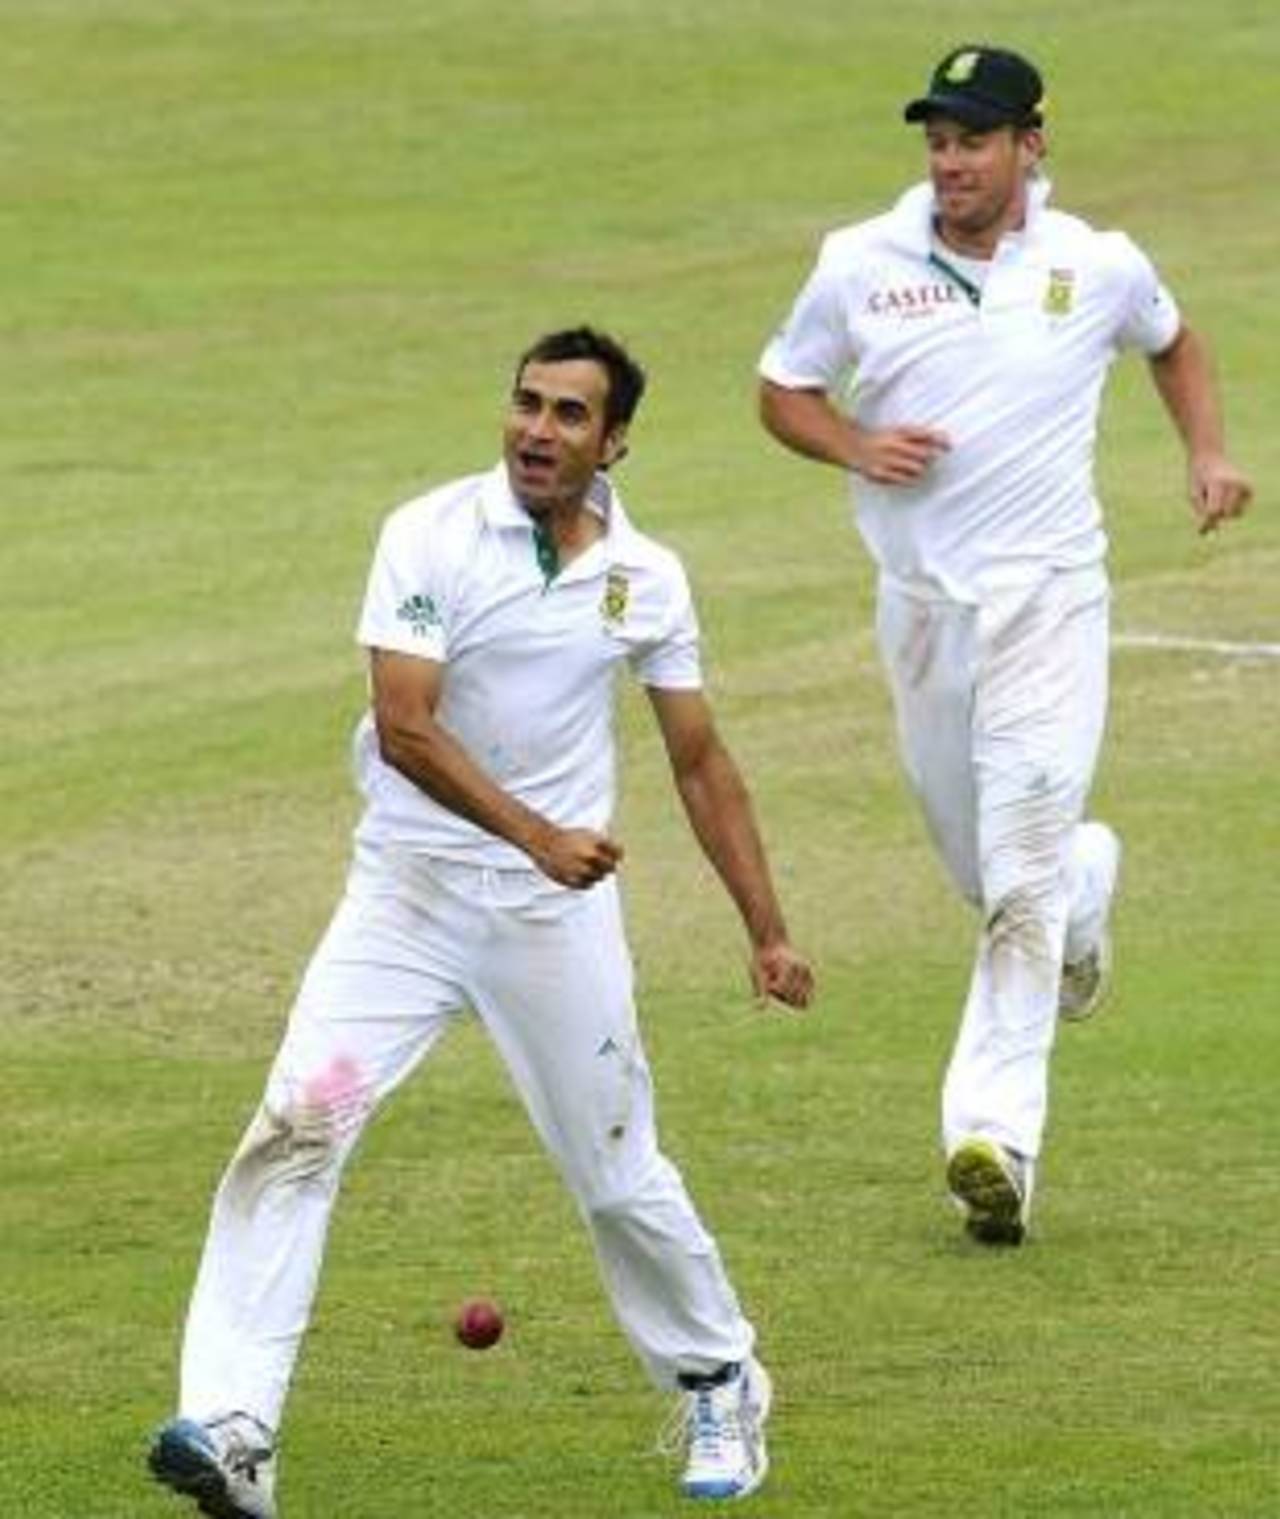 Imran Tahir dismissed Kumar Sangakkara, South Africa v Sri Lanka, 2nd Test, Durban, 3rd day, December 28, 2011